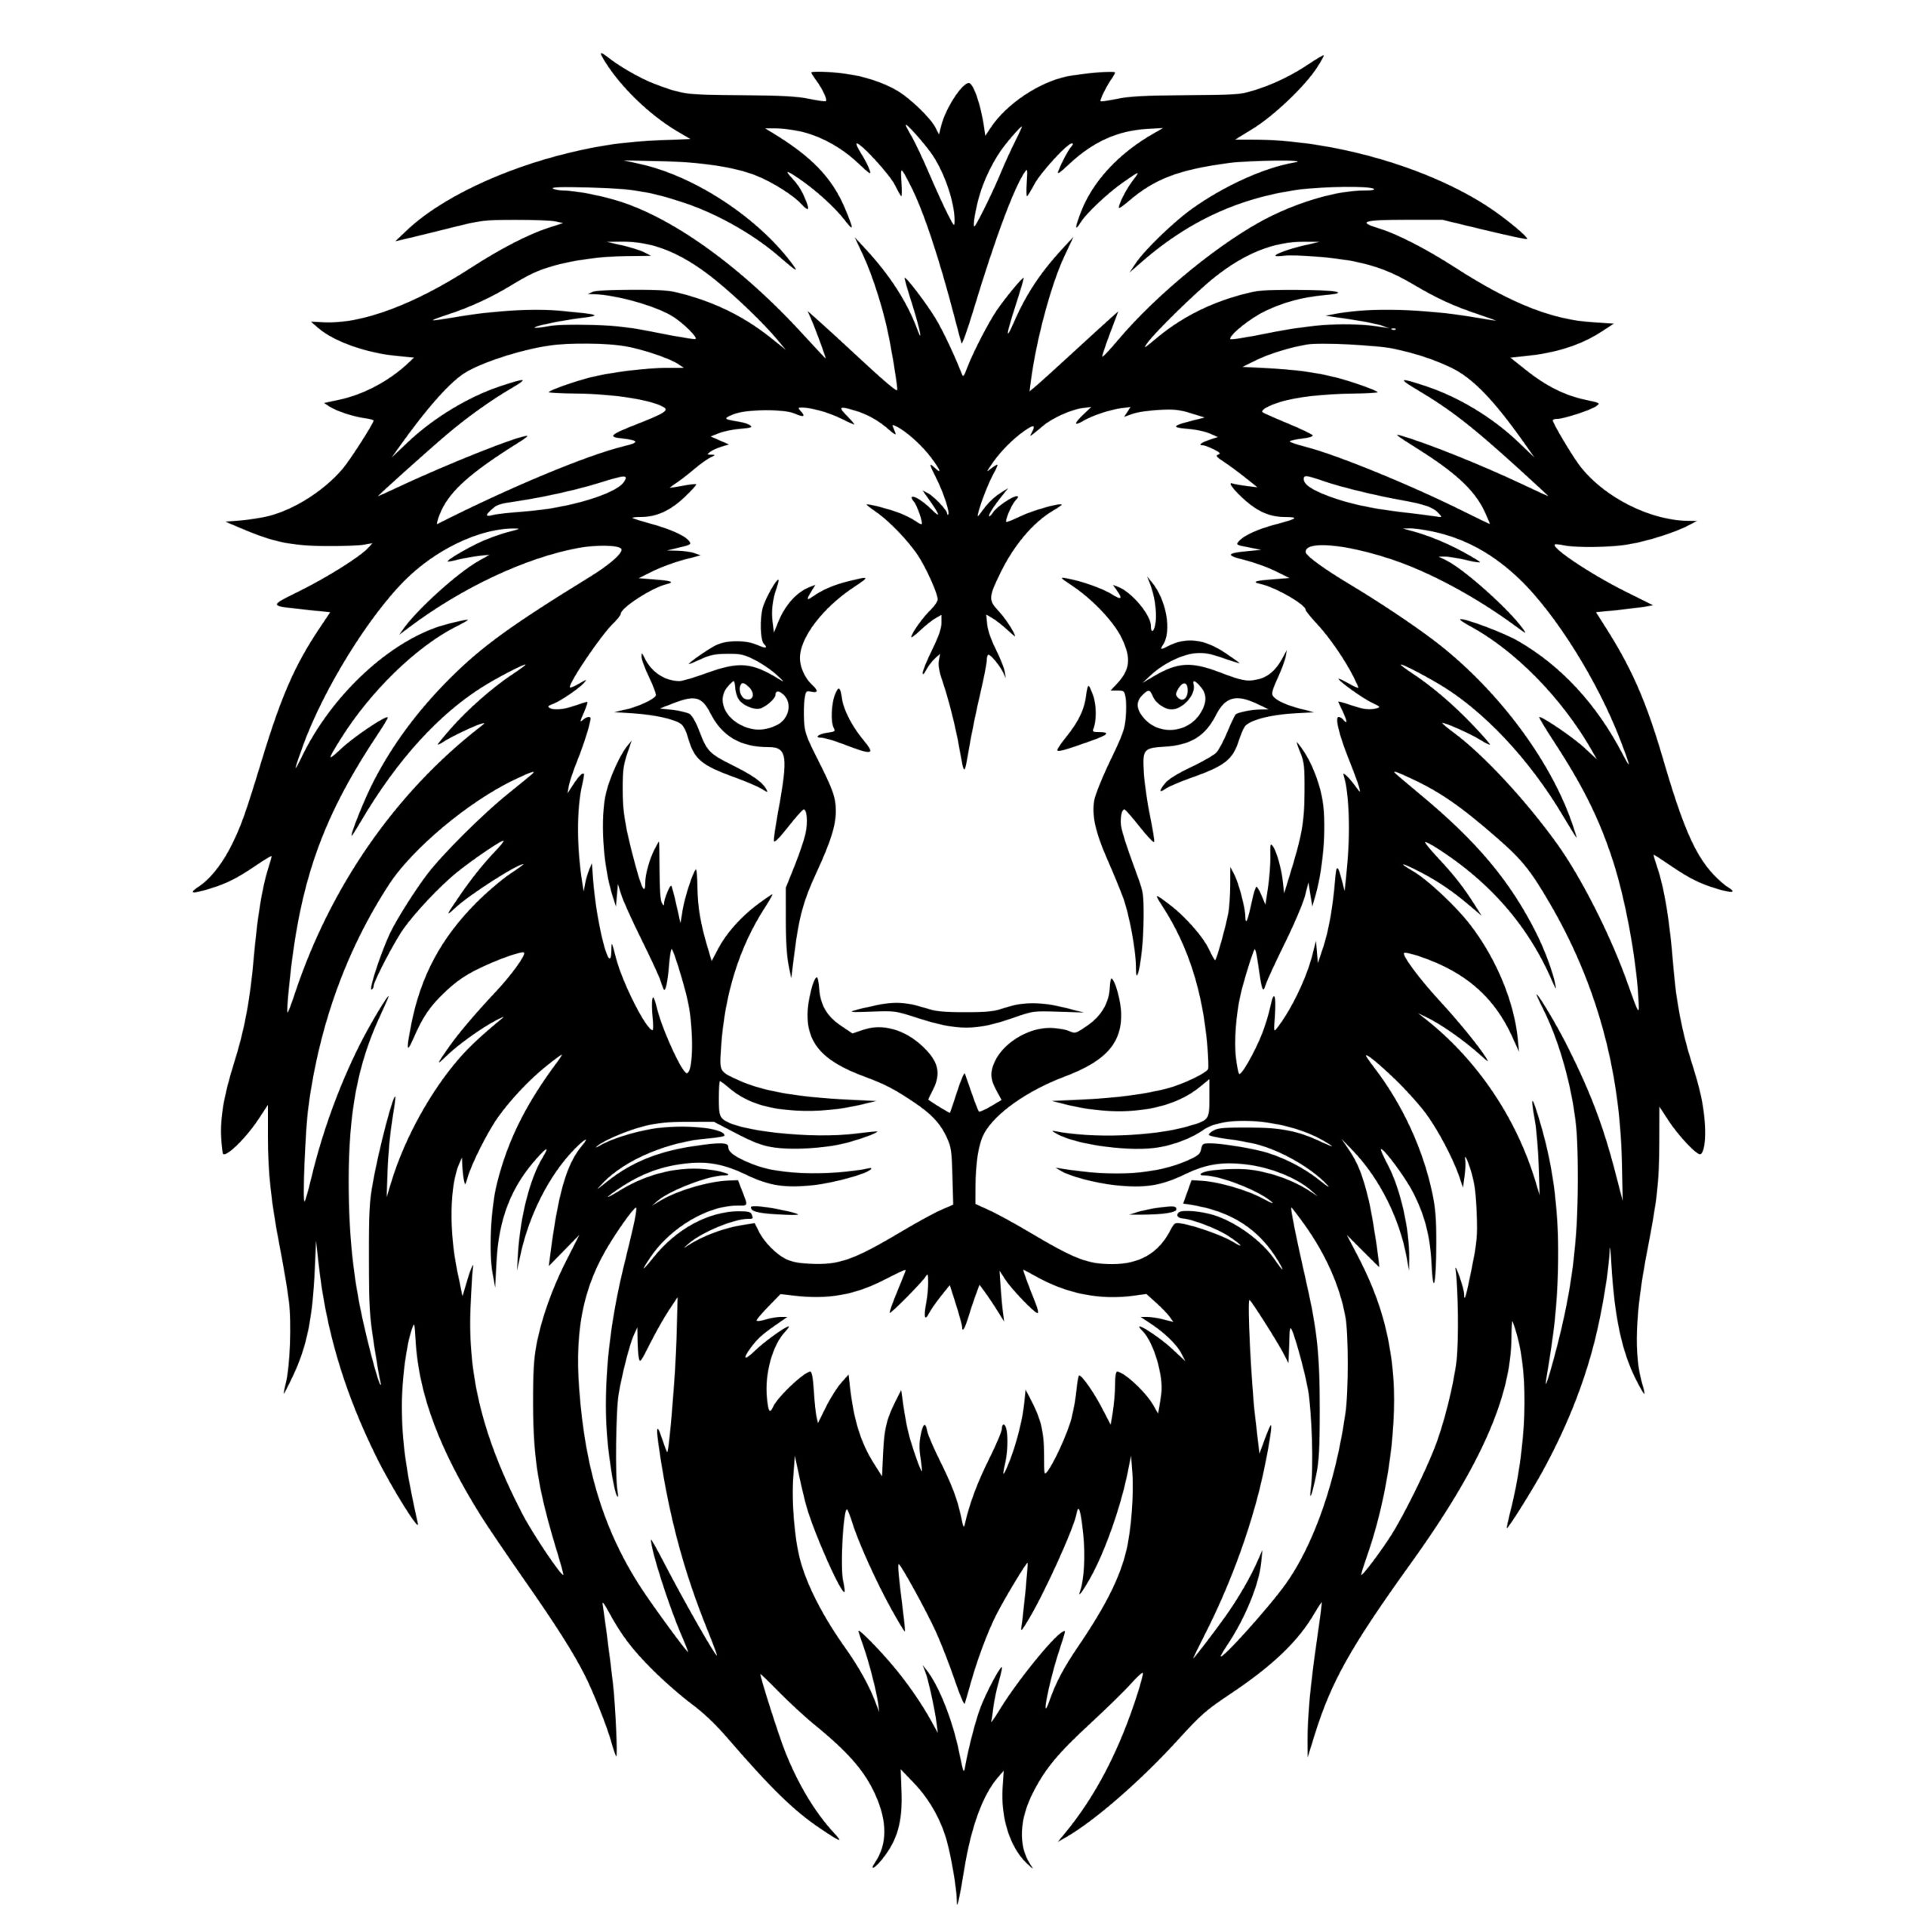 Striking Lion's Mane: SVG, PNG, DXF Files for Cricut, Silhouette, Laser ...